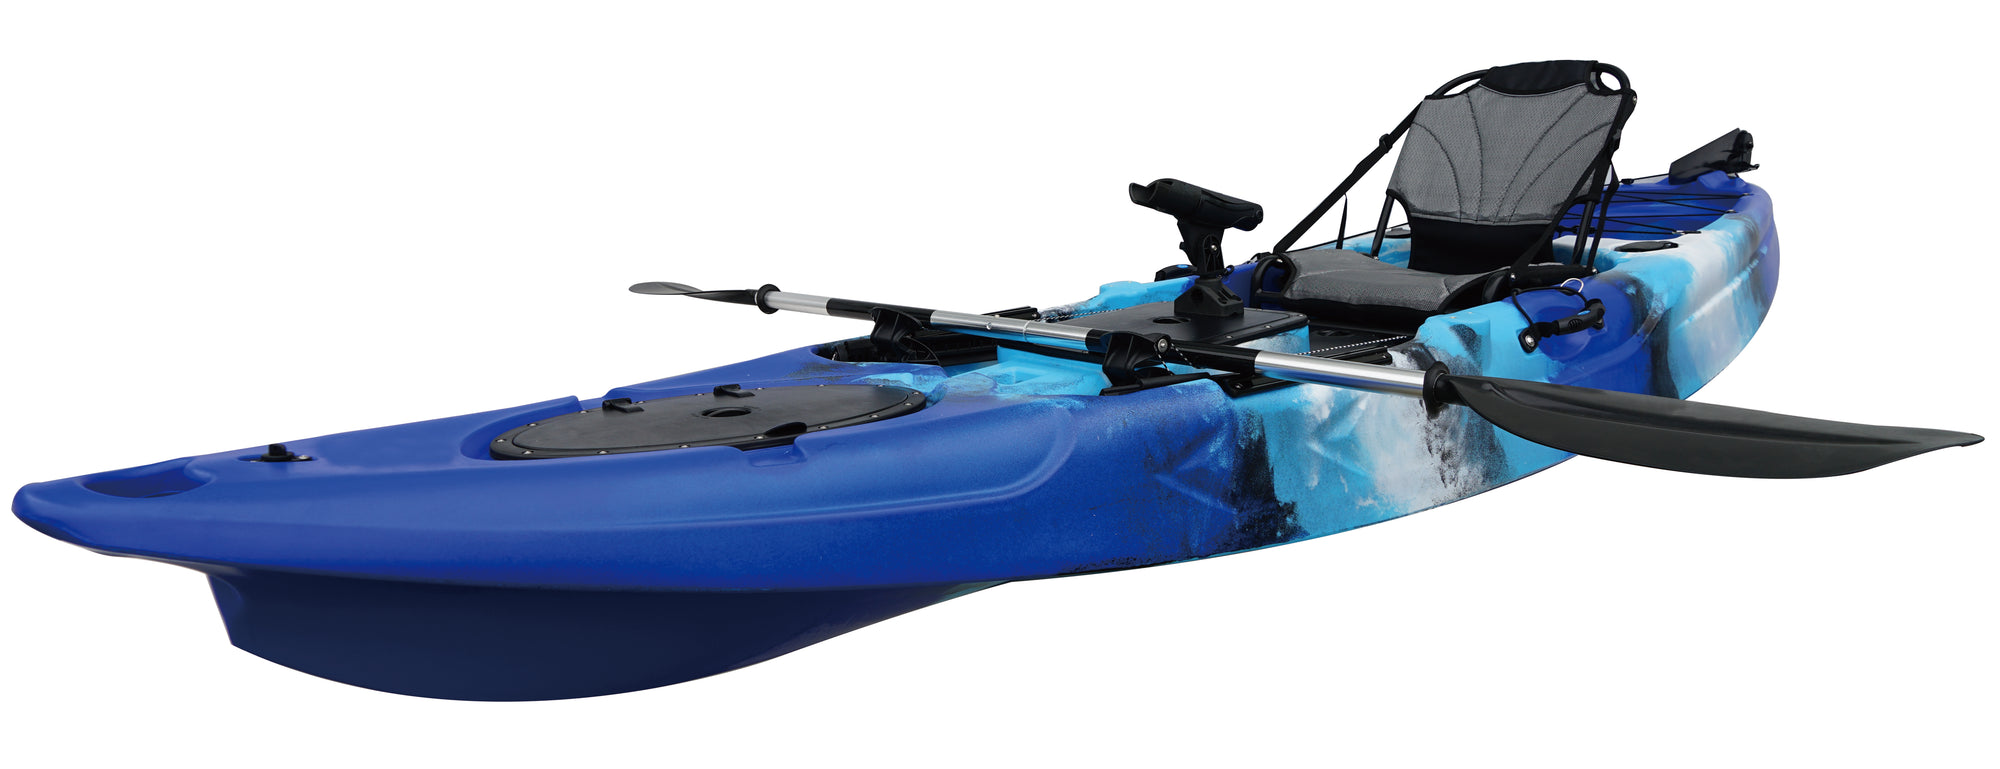 Kayak rigido con asiento alto, kayak de pescar, desde Cambridge